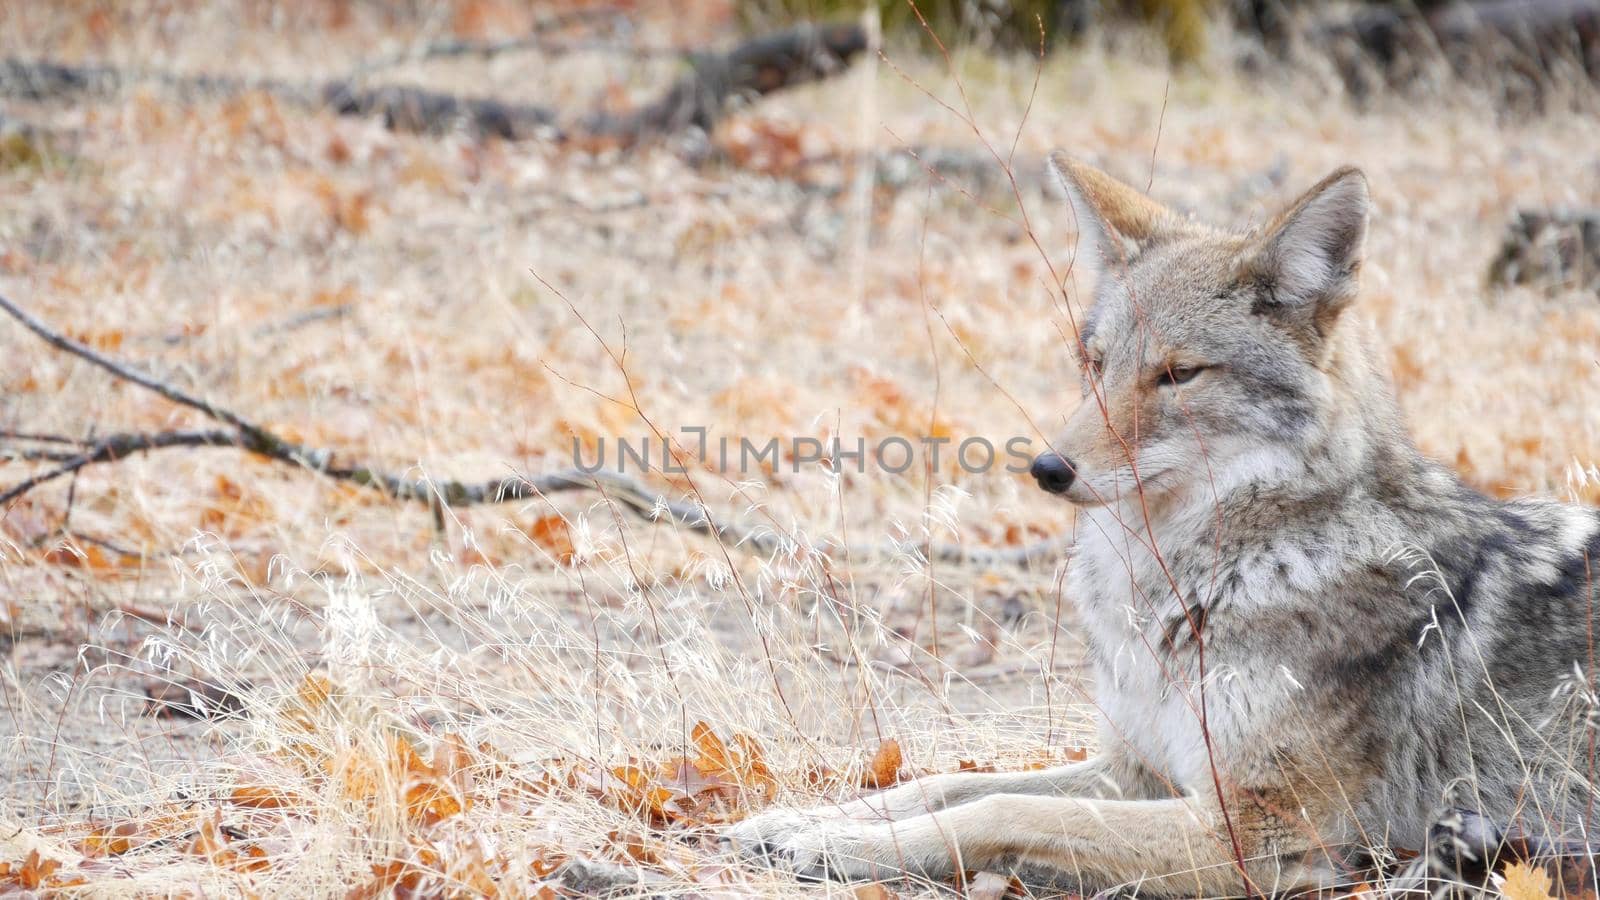 Wolf coyote or coywolf portrait, head face and eyes. Autumn fall forest wildlife by DogoraSun